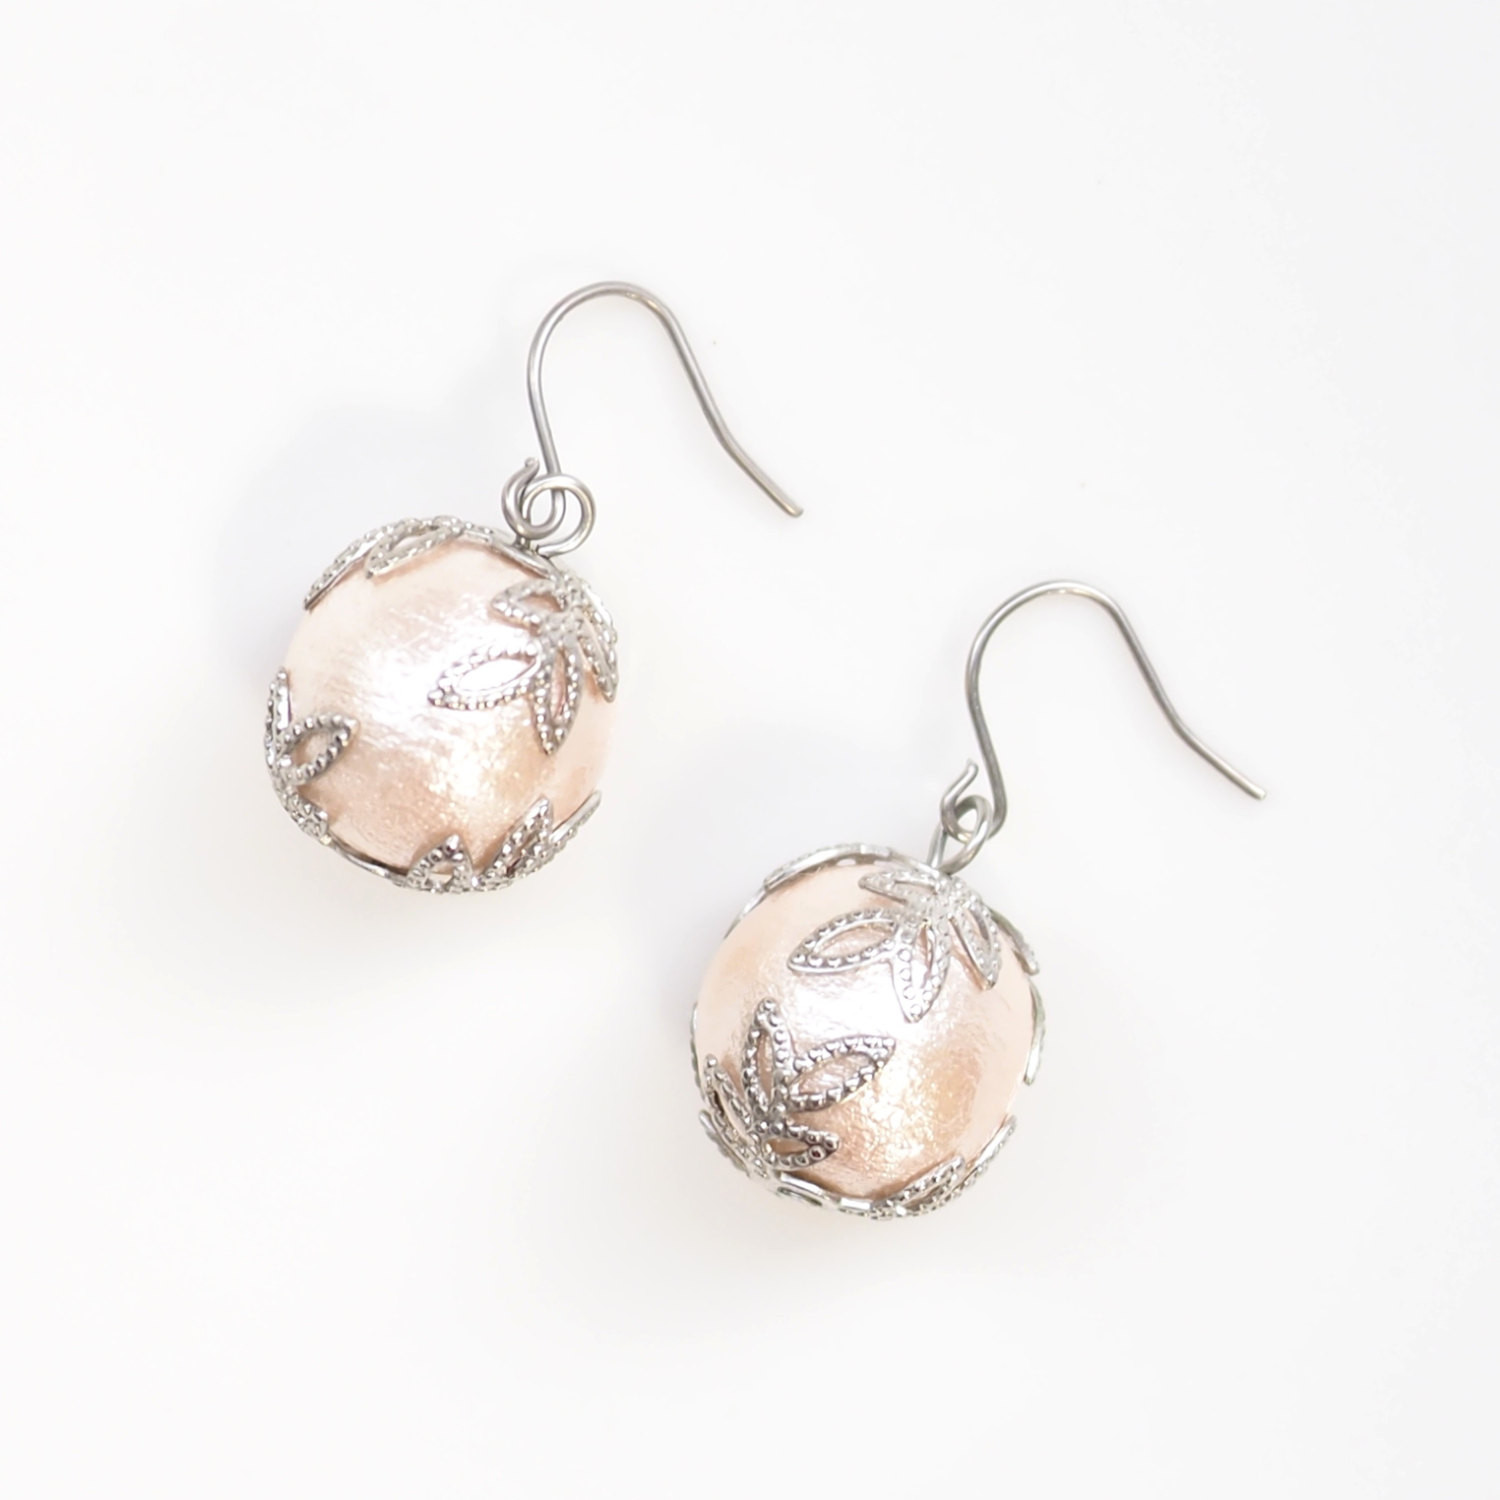 Titanium Earrings For Sensitive Ears
 Cotton Pearl Titanium Earrings for Sensitive Ears Bridal Pink